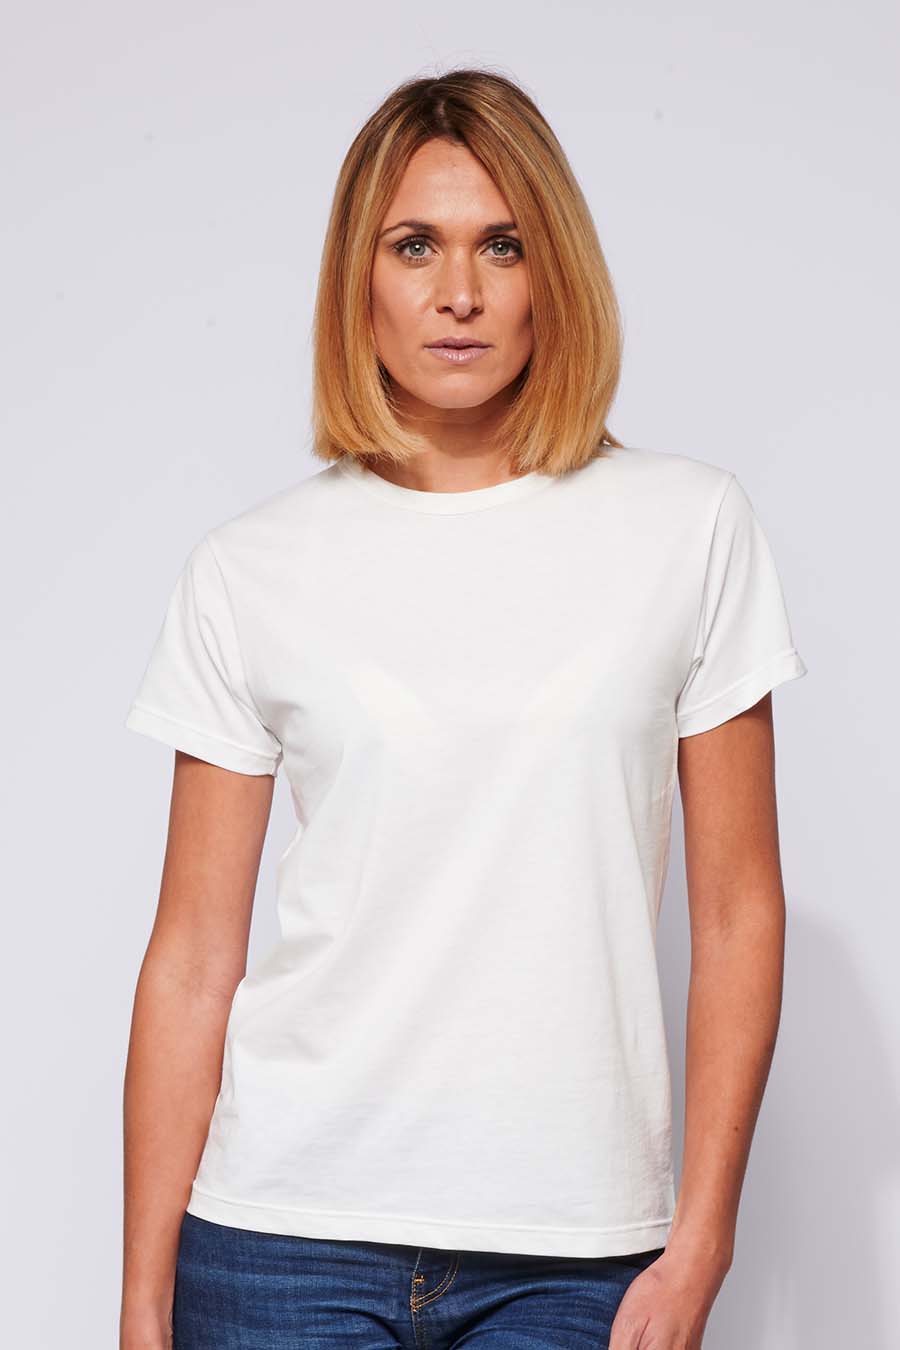 Tee-shirt Femme made in France en coton bio BEATRICE blanc - FIL ROUGE